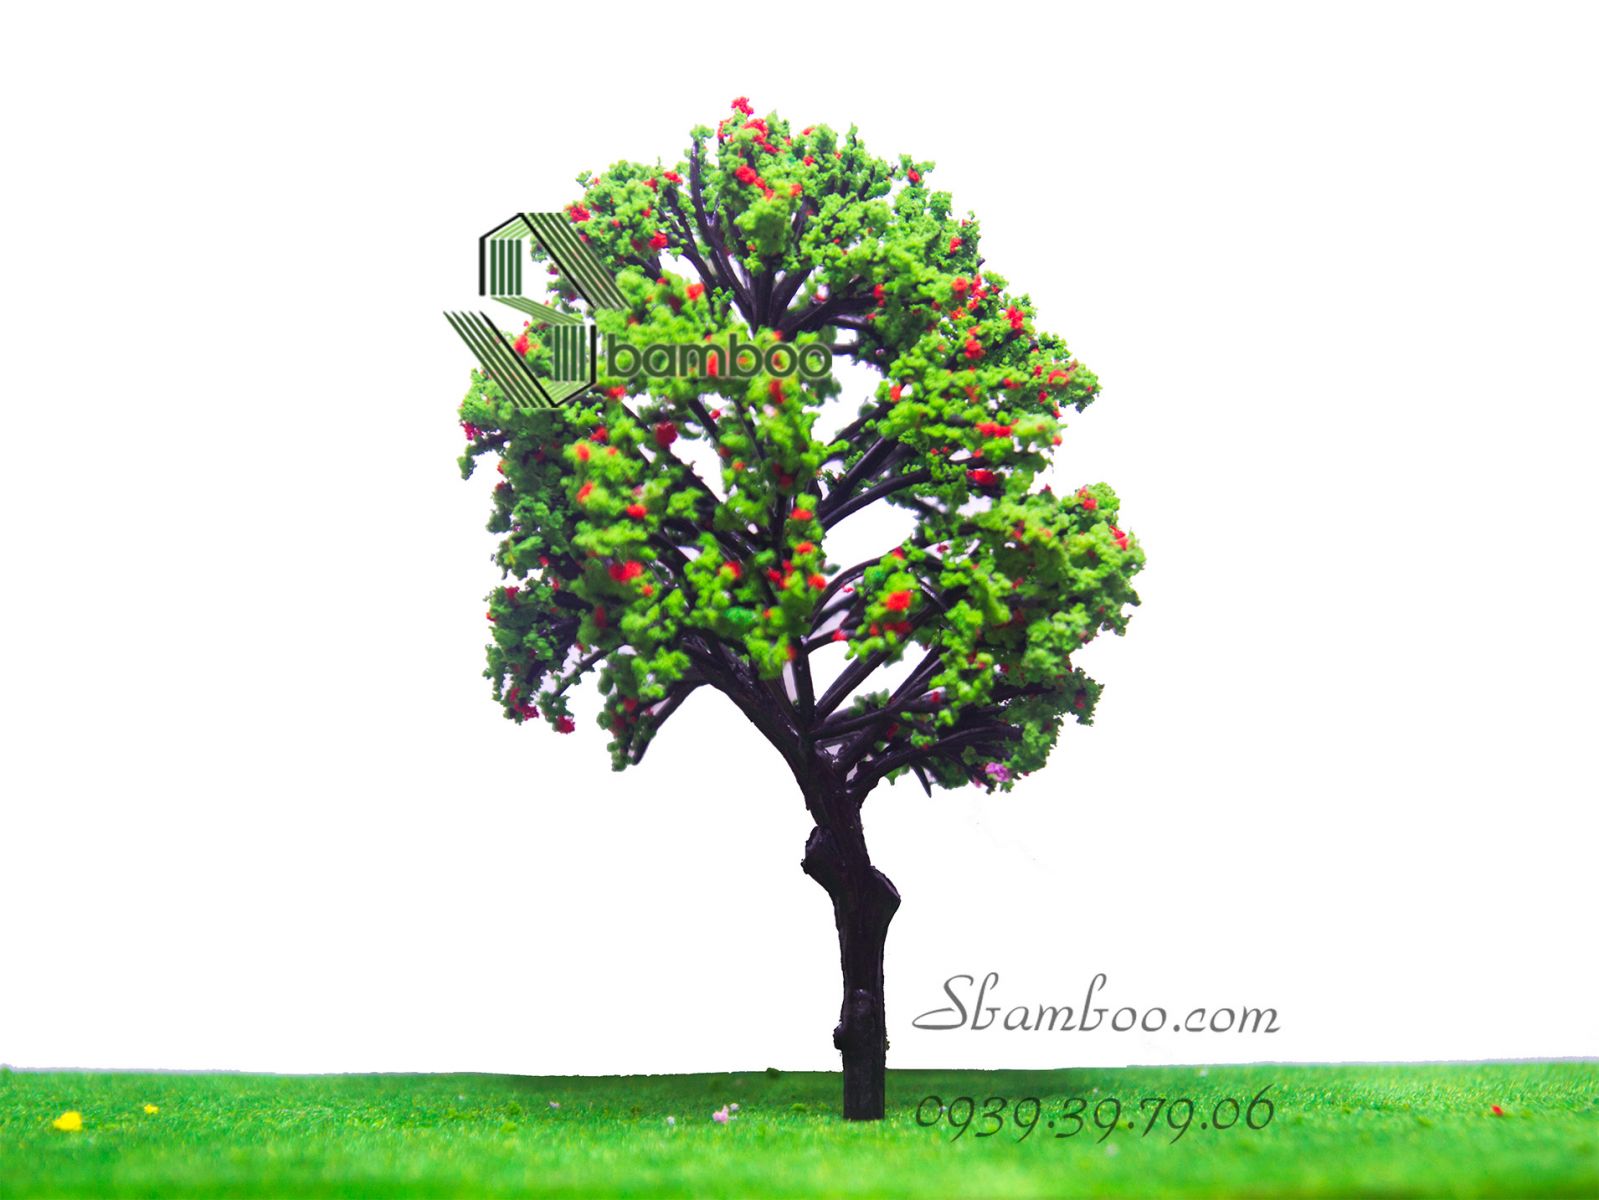 MODEL TREE